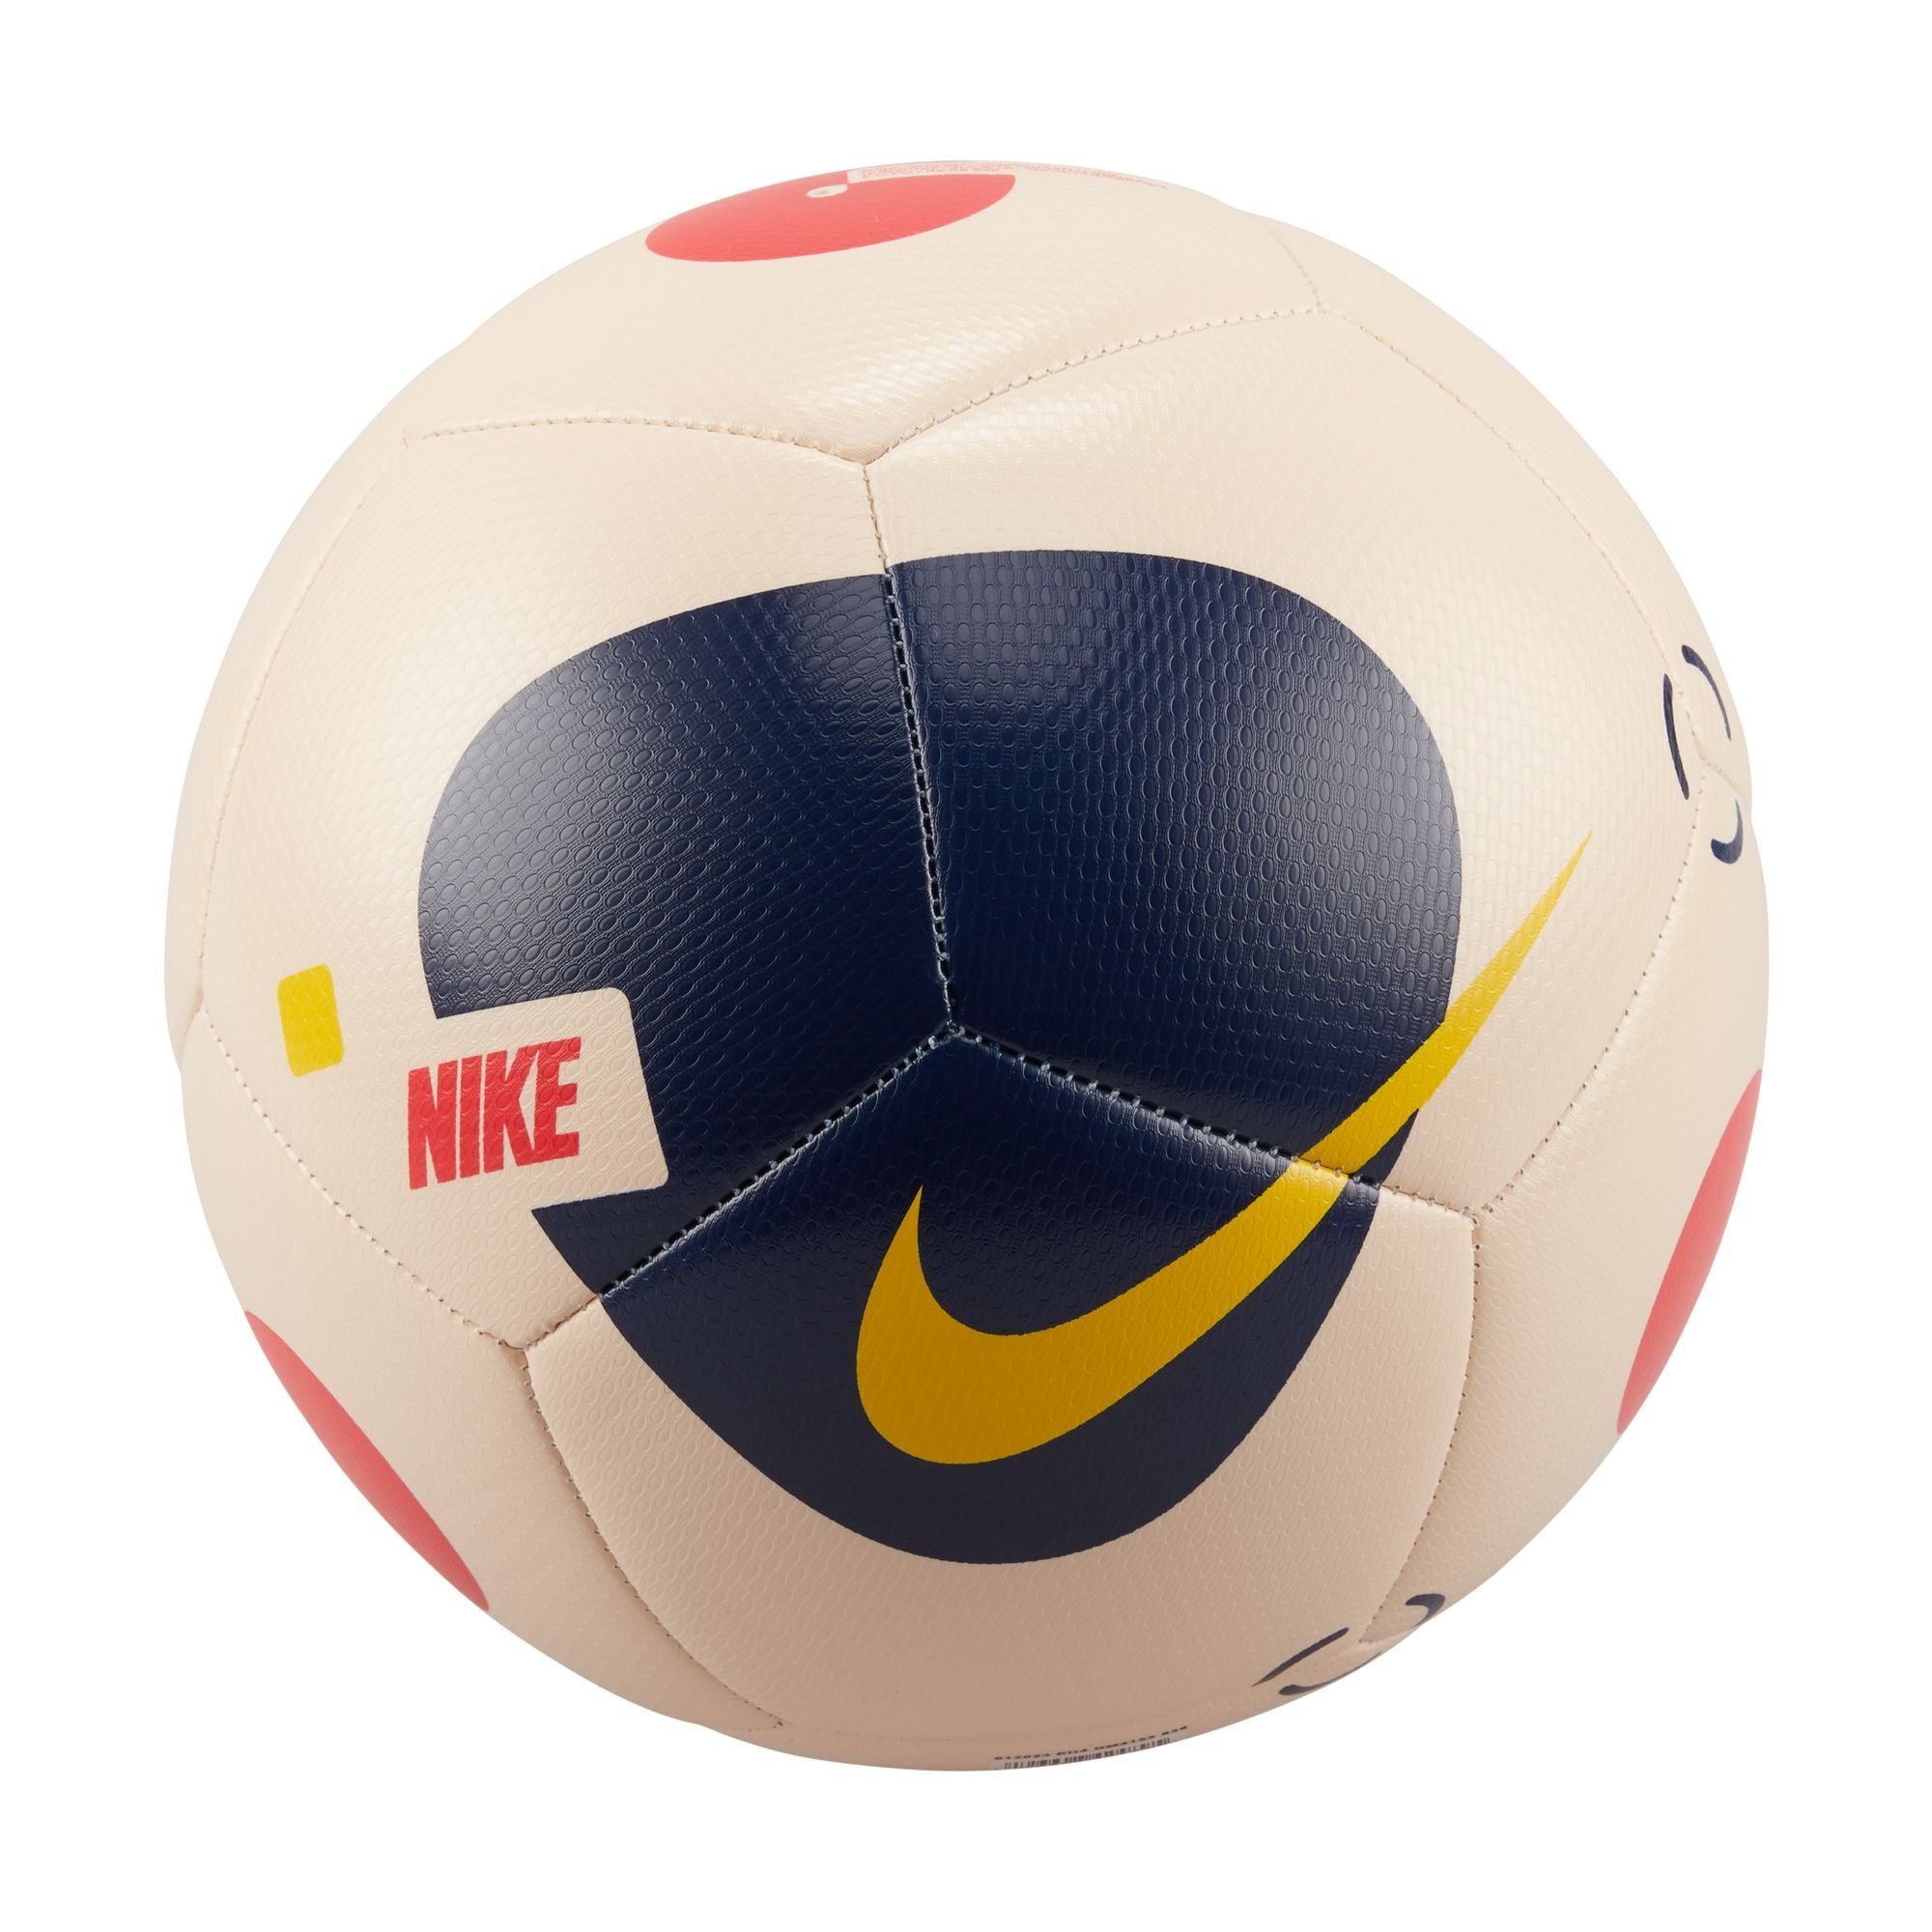 Nike Futsal Maestro Soccer Ball